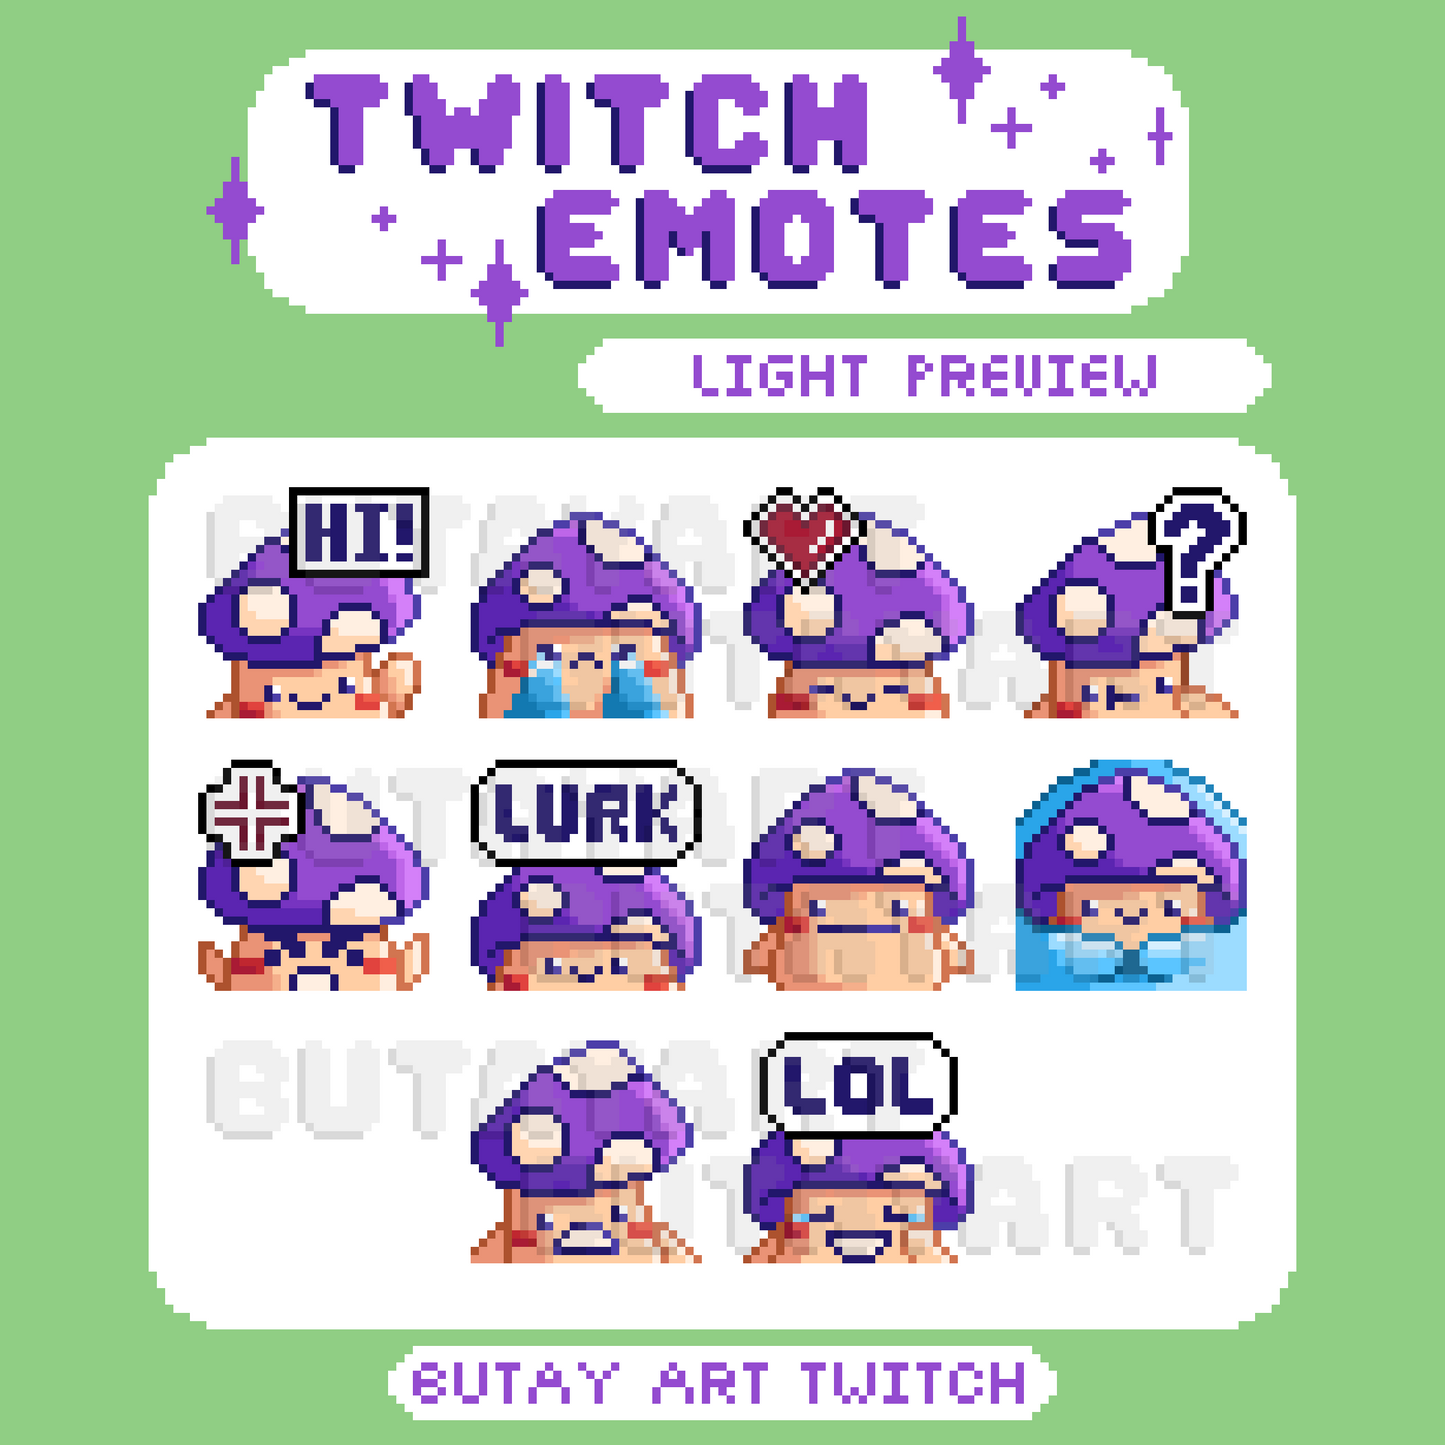 Mushroom Friend Purple Twitch Emotes